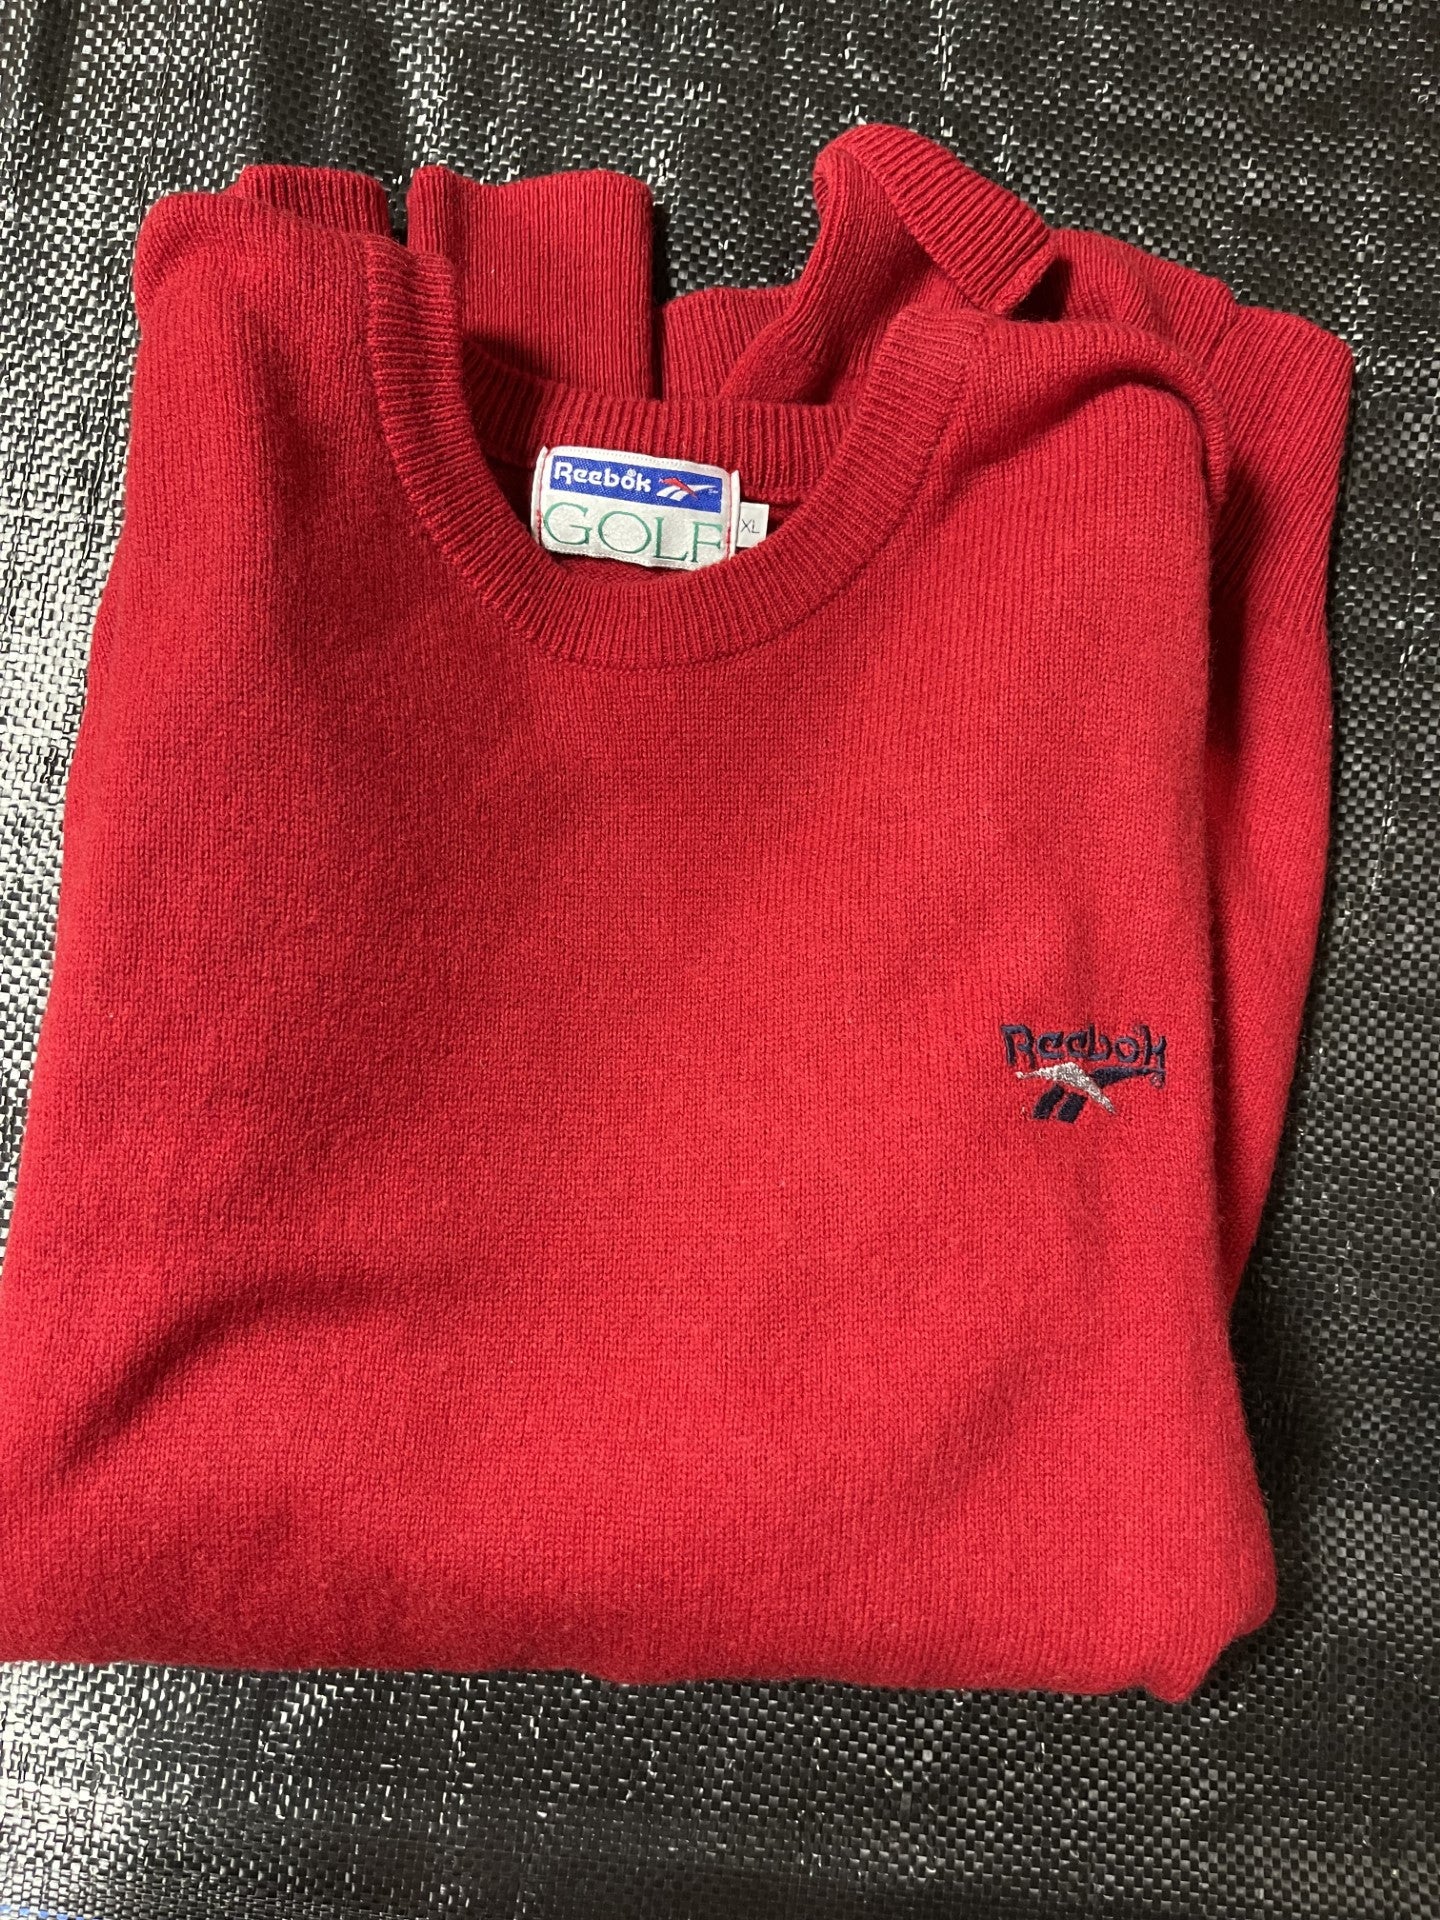 Reebok Vintage Red Knit Jumper XL